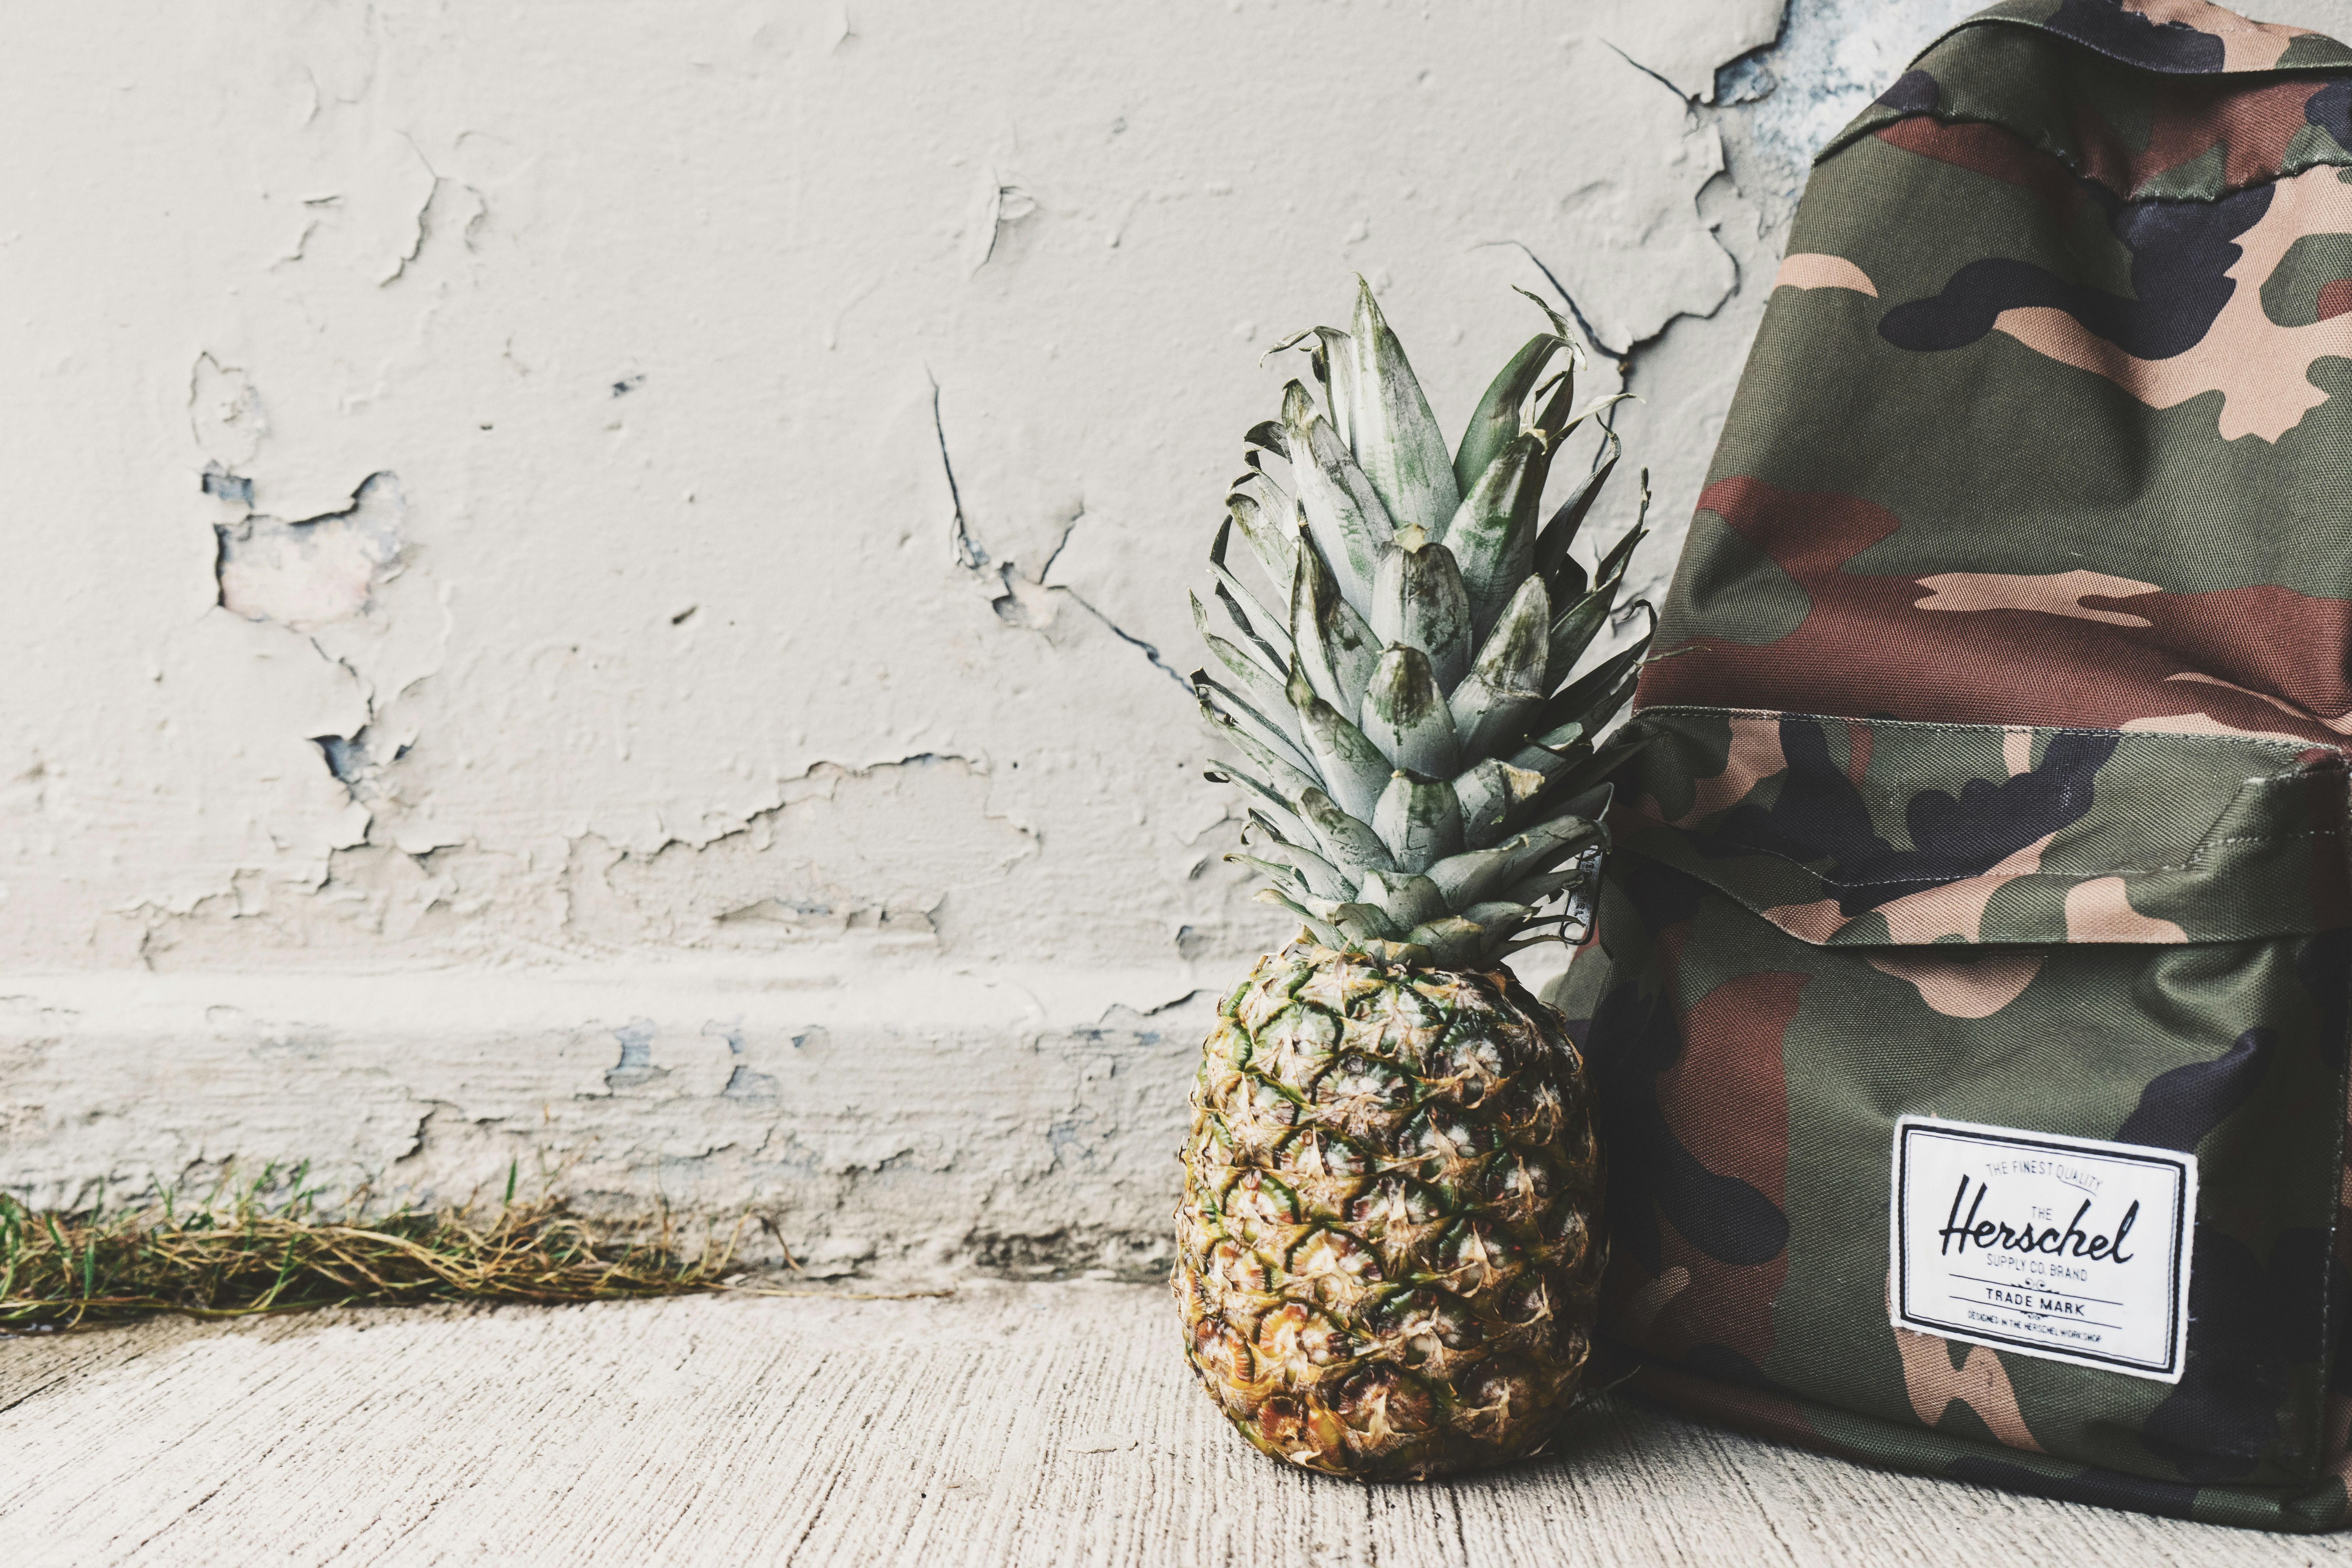 pineapple fruit beside Hershel backpack